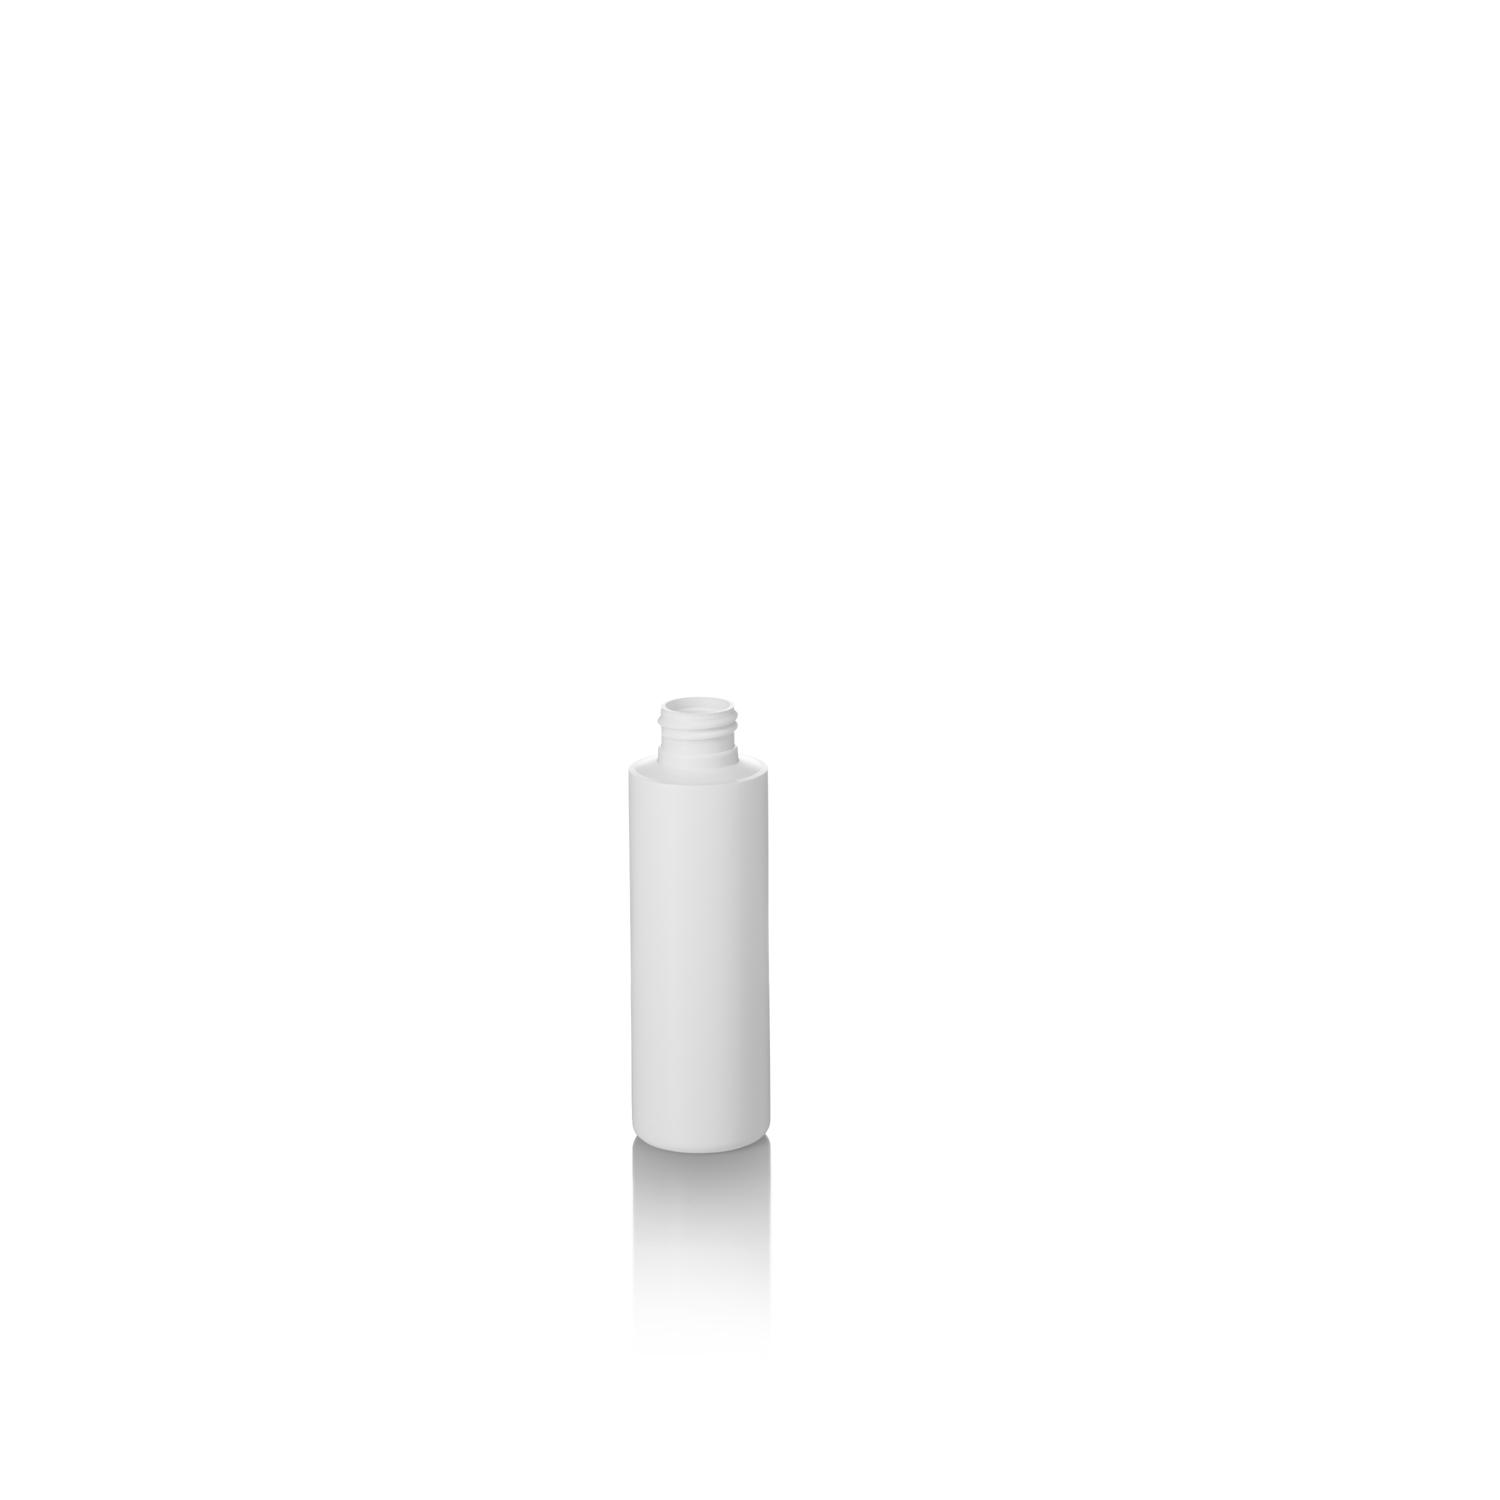 125ml White HDPE Tubular Bottle